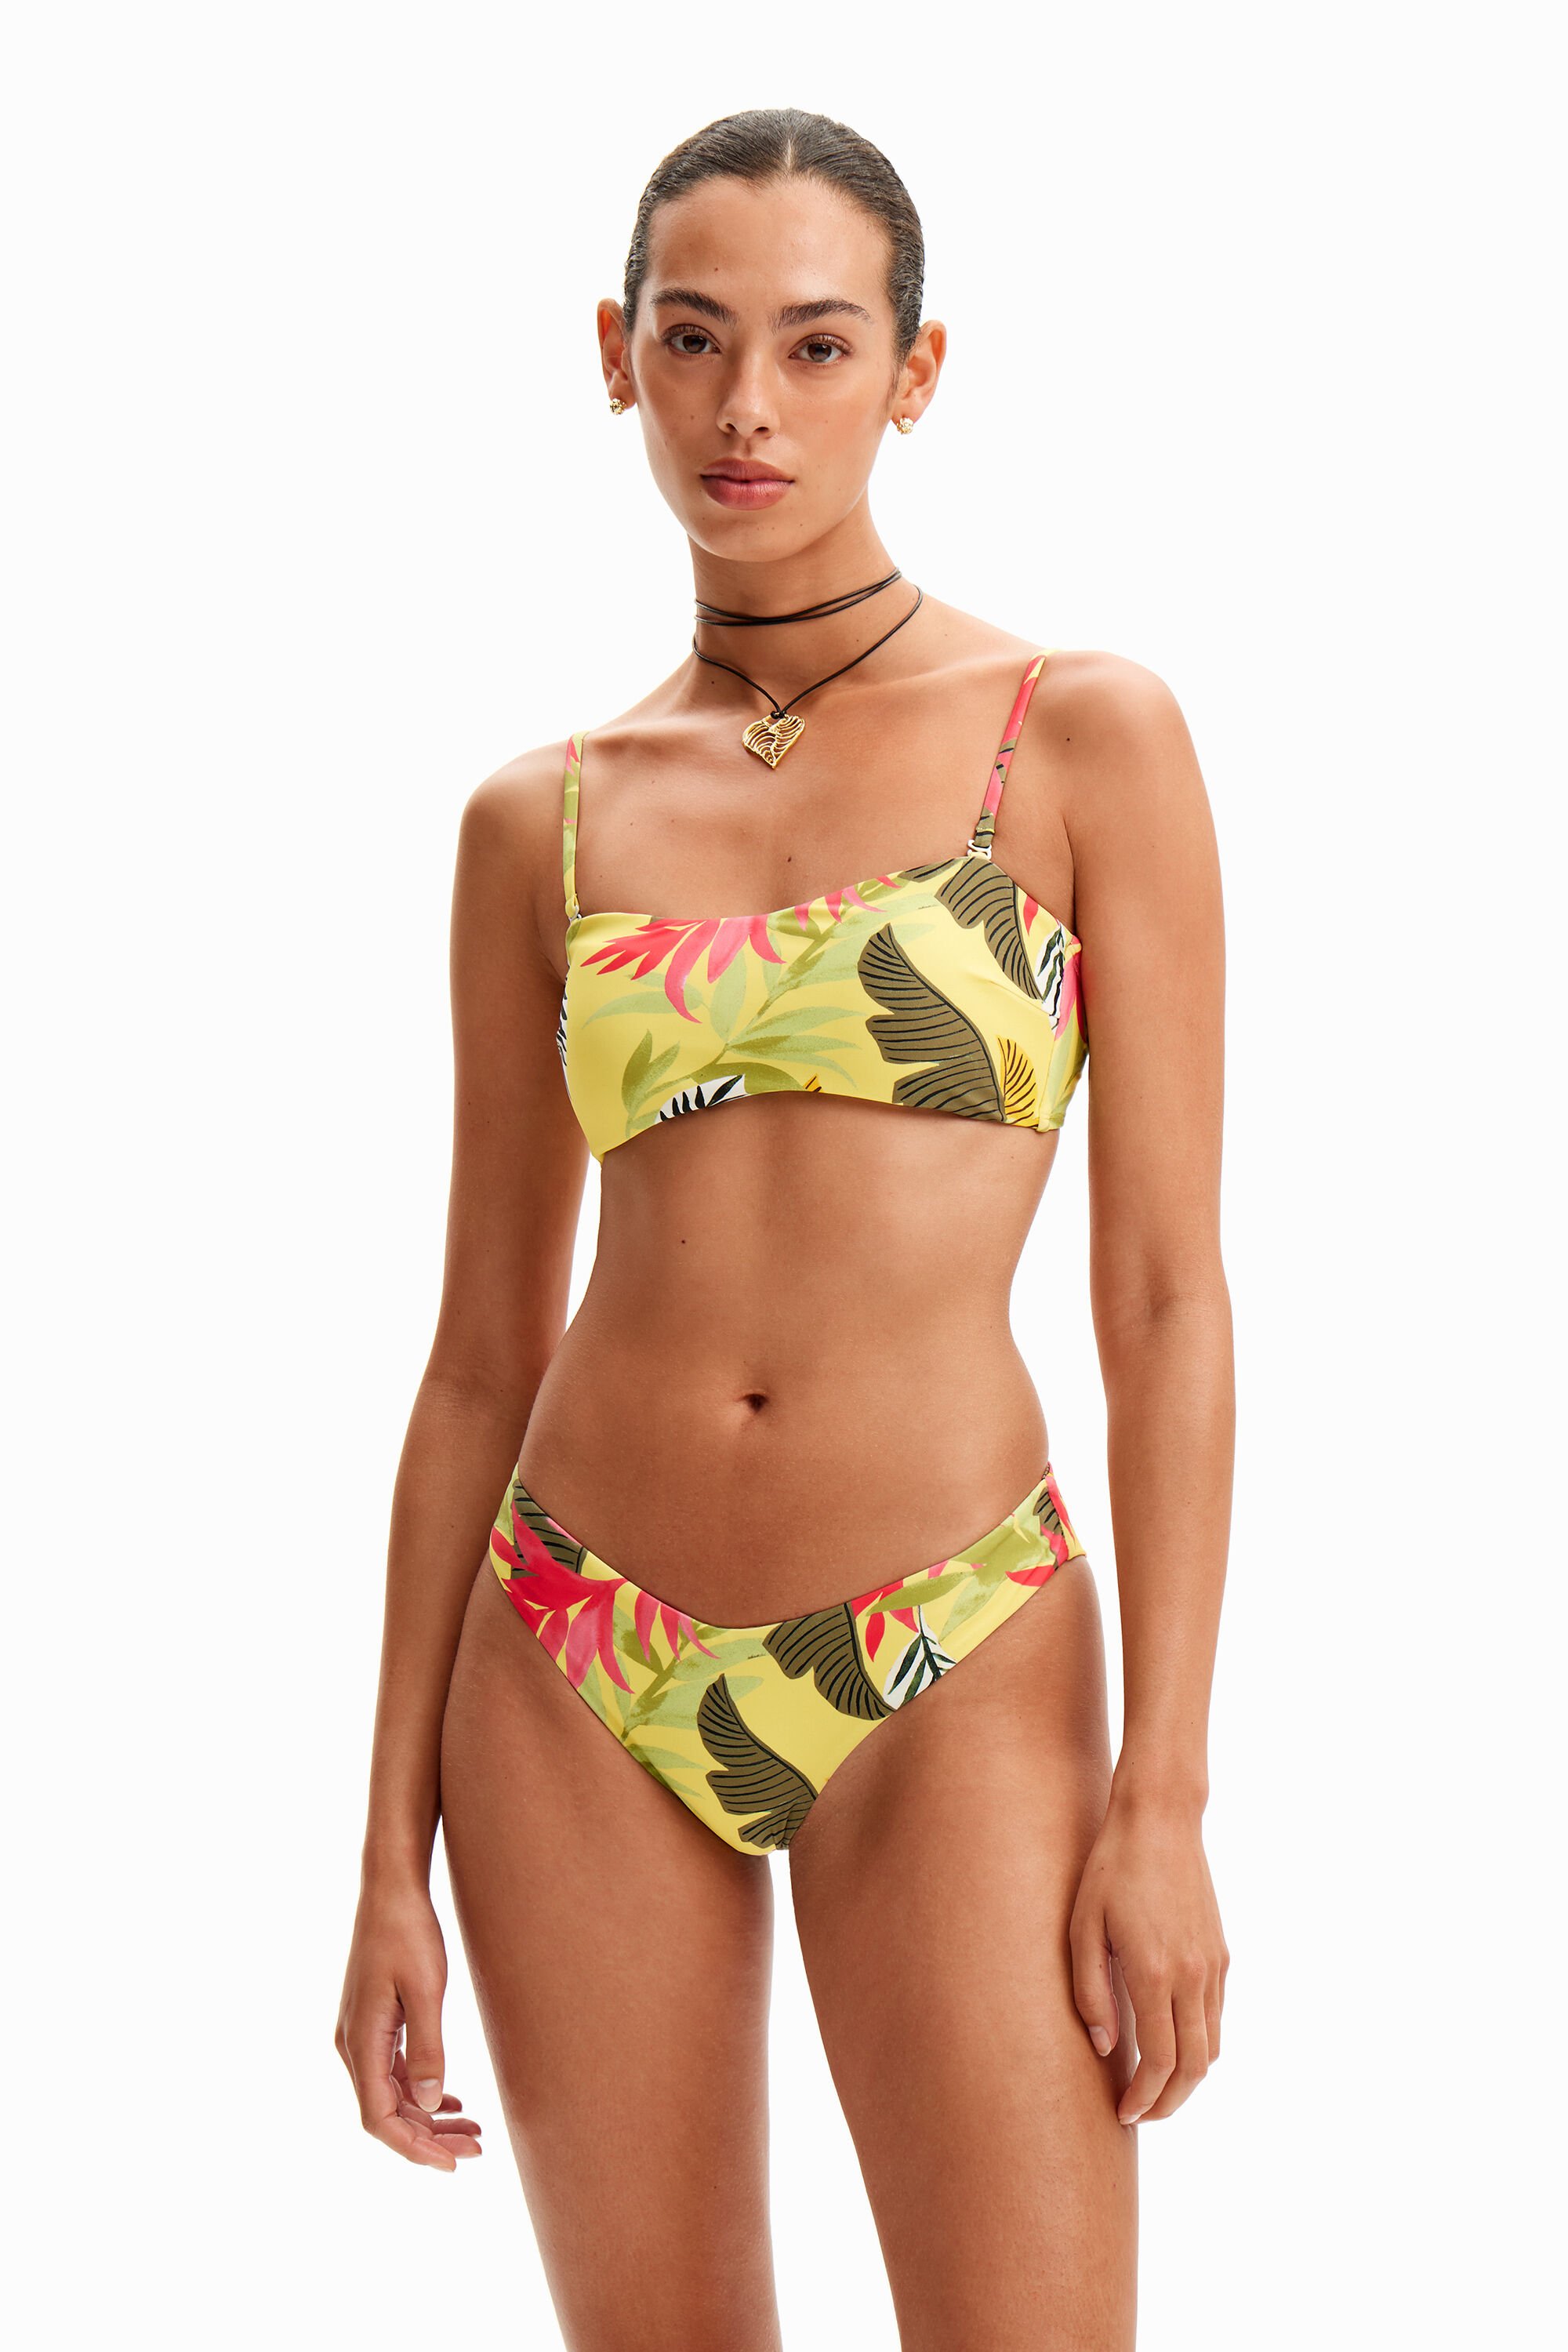 Desigual Tropical bandeau bikini